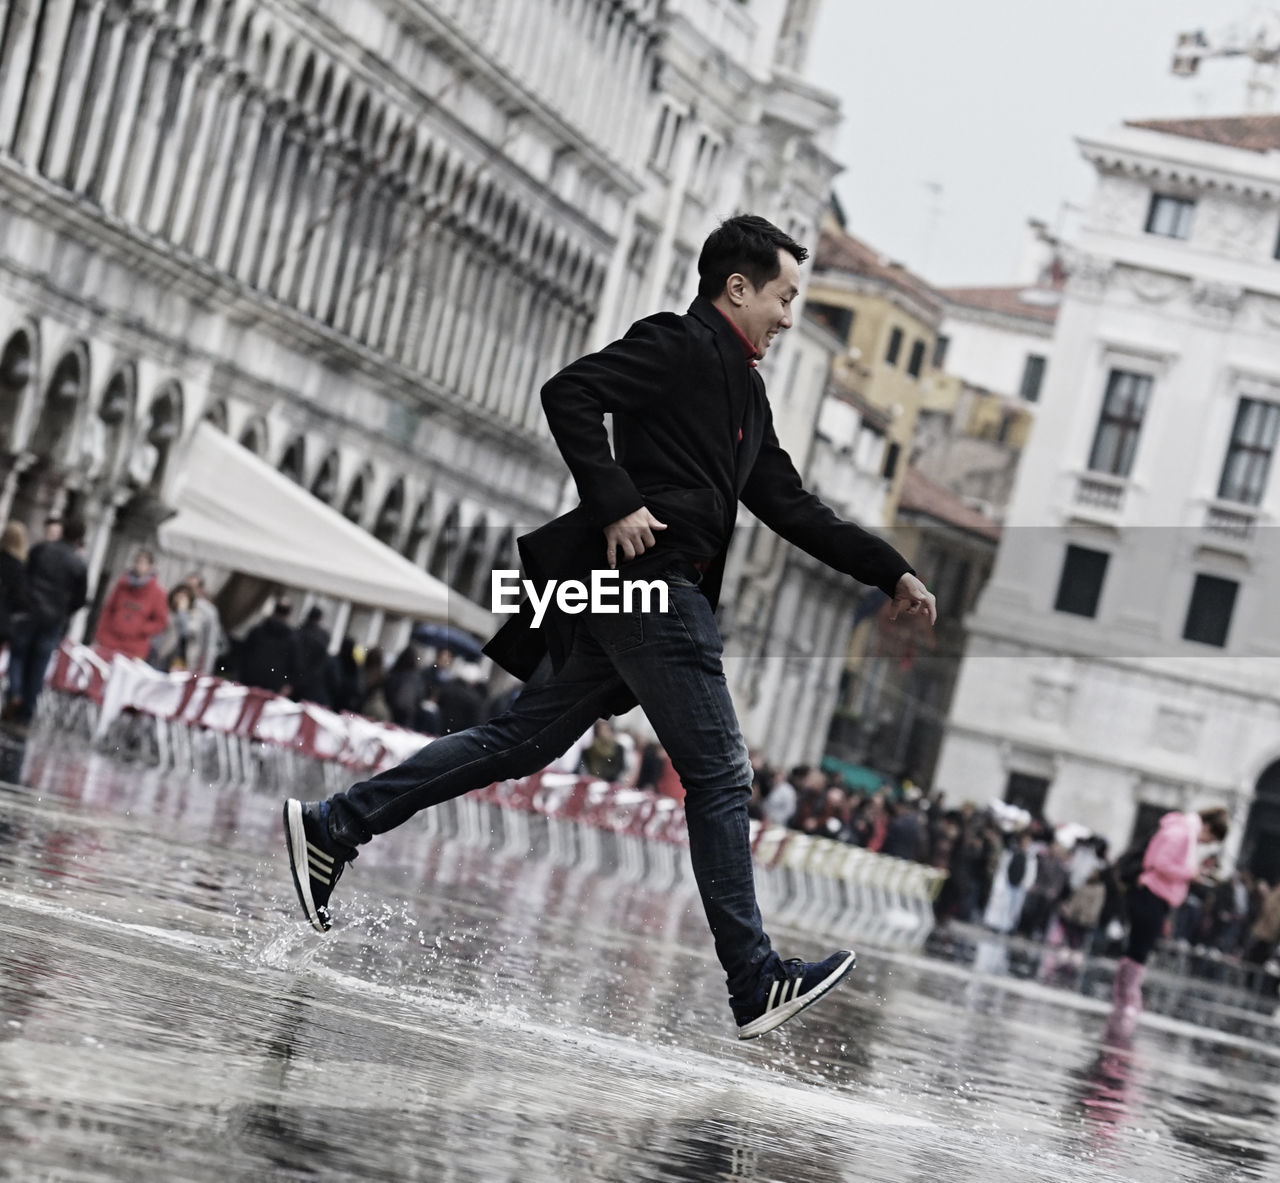 YOUNG MAN RUNNING IN RAIN